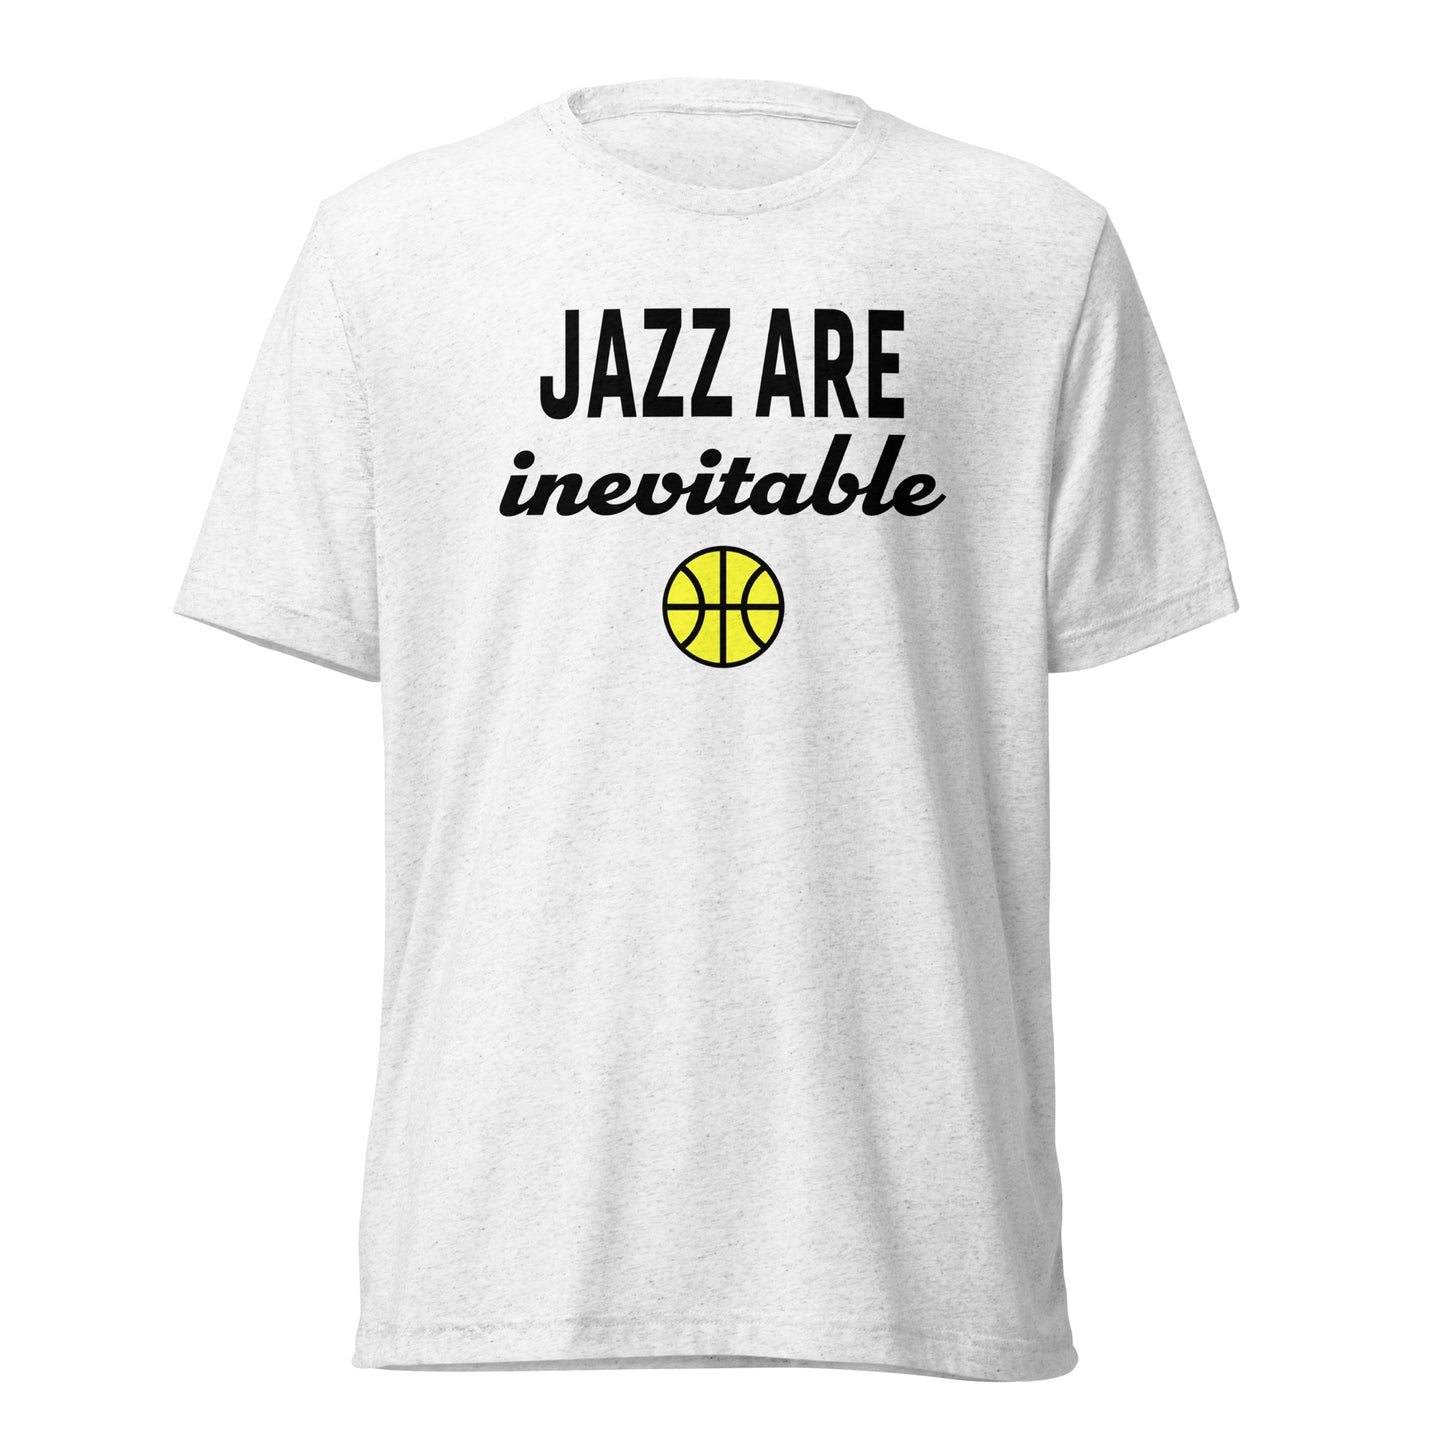 Jazz Are Inevitable - Short sleeve t-shirt